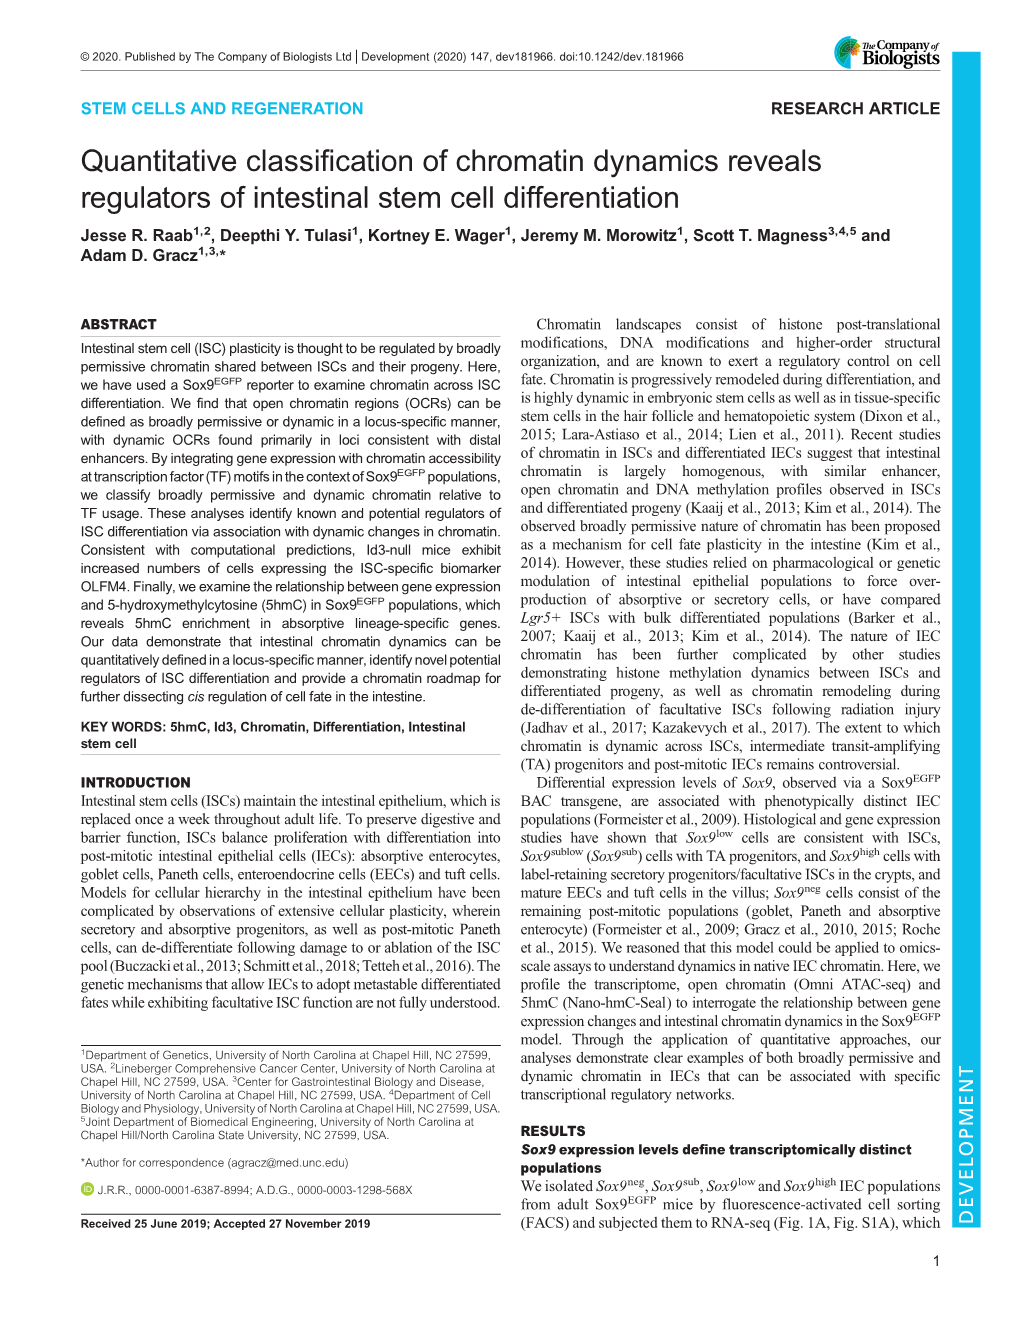 Quantitative Classification of Chromatin Dynamics Reveals Regulators of Intestinal Stem Cell Differentiation Jesse R